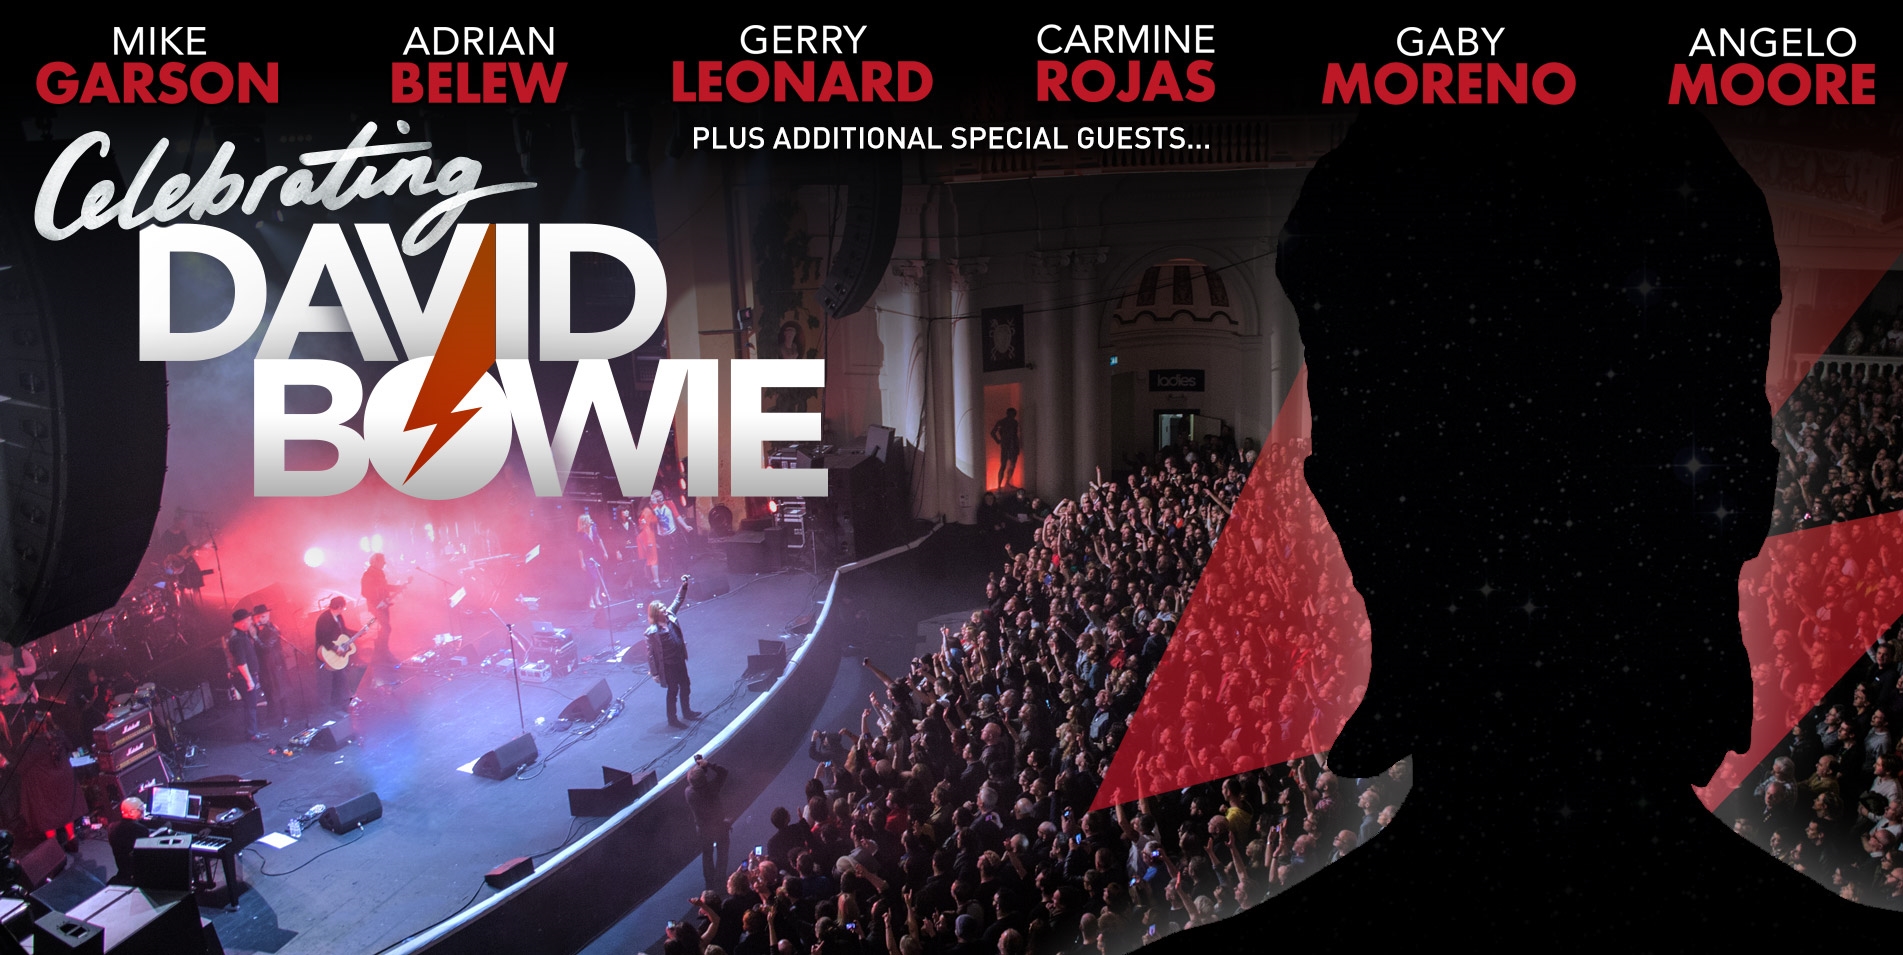 Celebrating David Bowie Tour de gira en el 2018